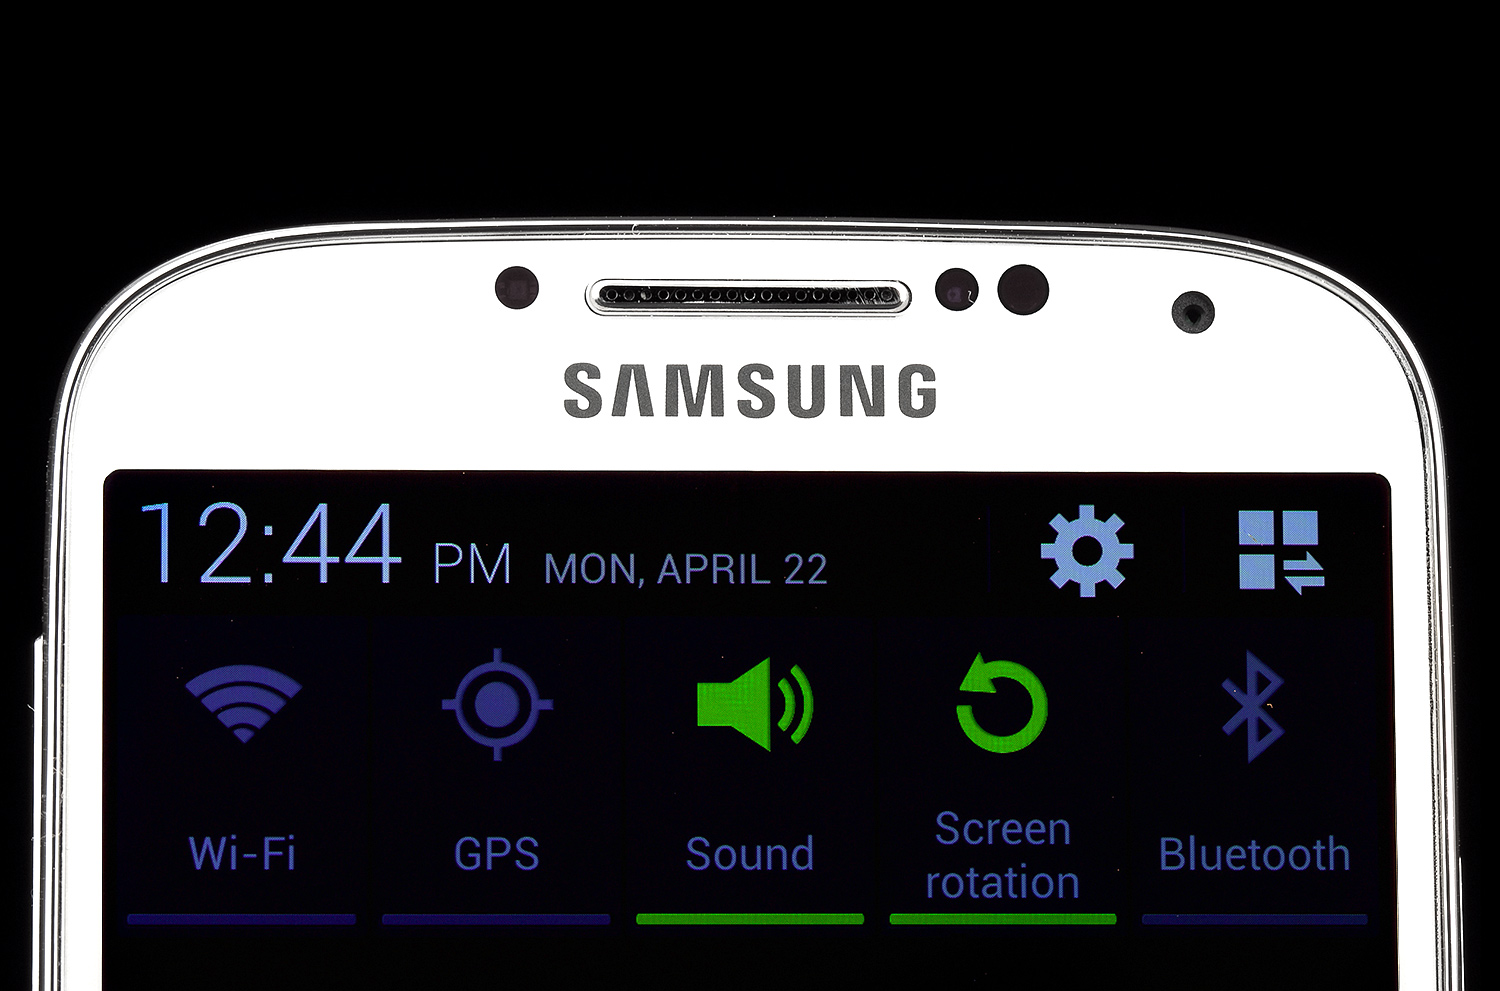 Сайт андроид самсунг. Скрытые функции Samsung Galaxy. Samsung Galaxy s4 WIFI Network. Тест дисплея самсунг. Самсунг датчики разновидность.